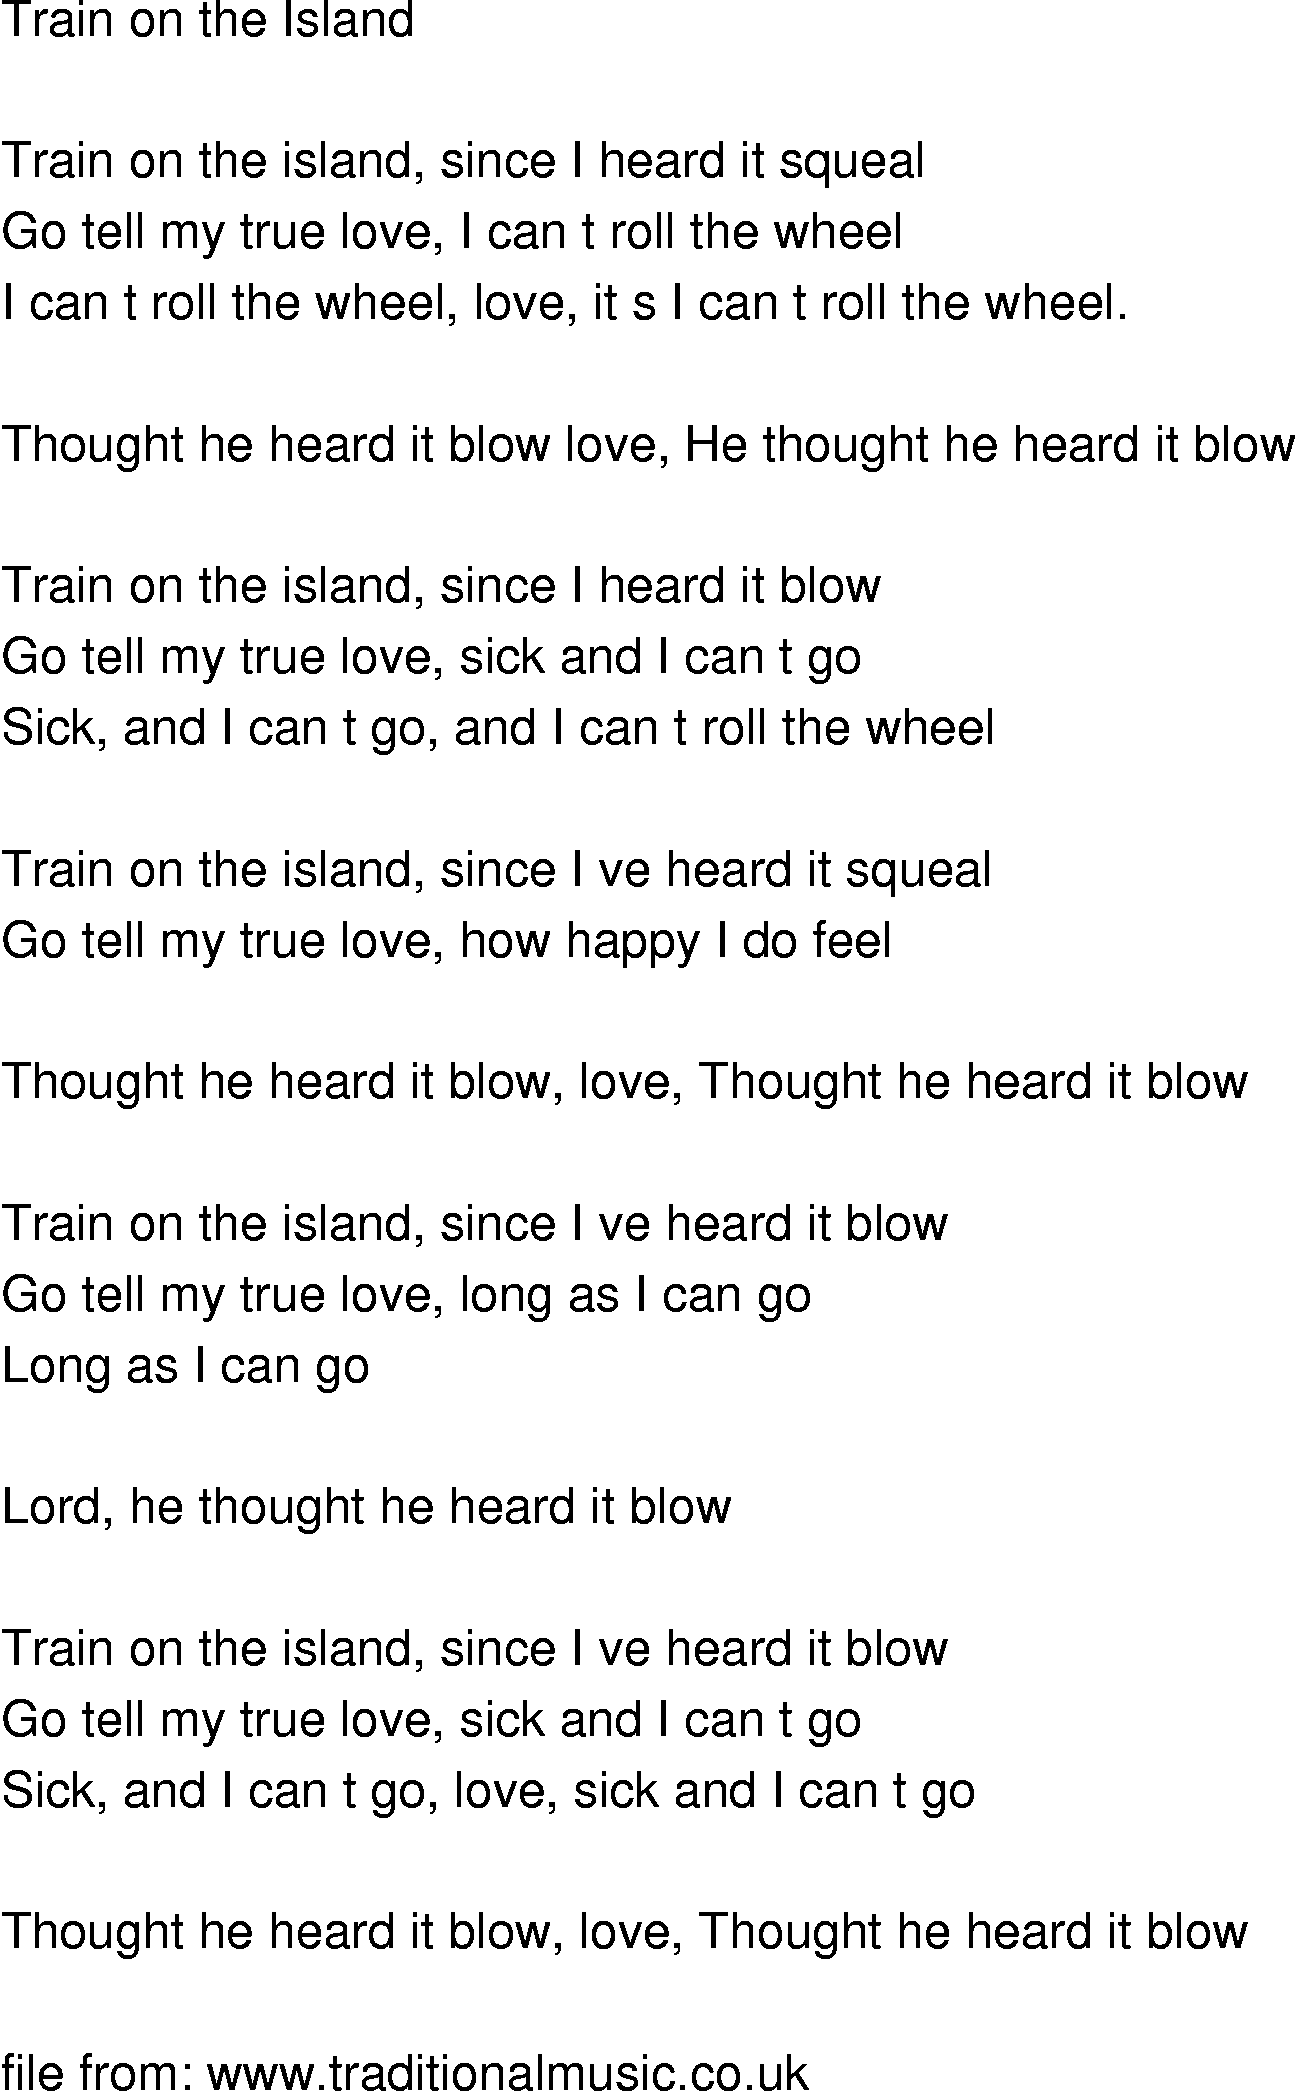 Old-Time (oldtimey) Song Lyrics - train on the island